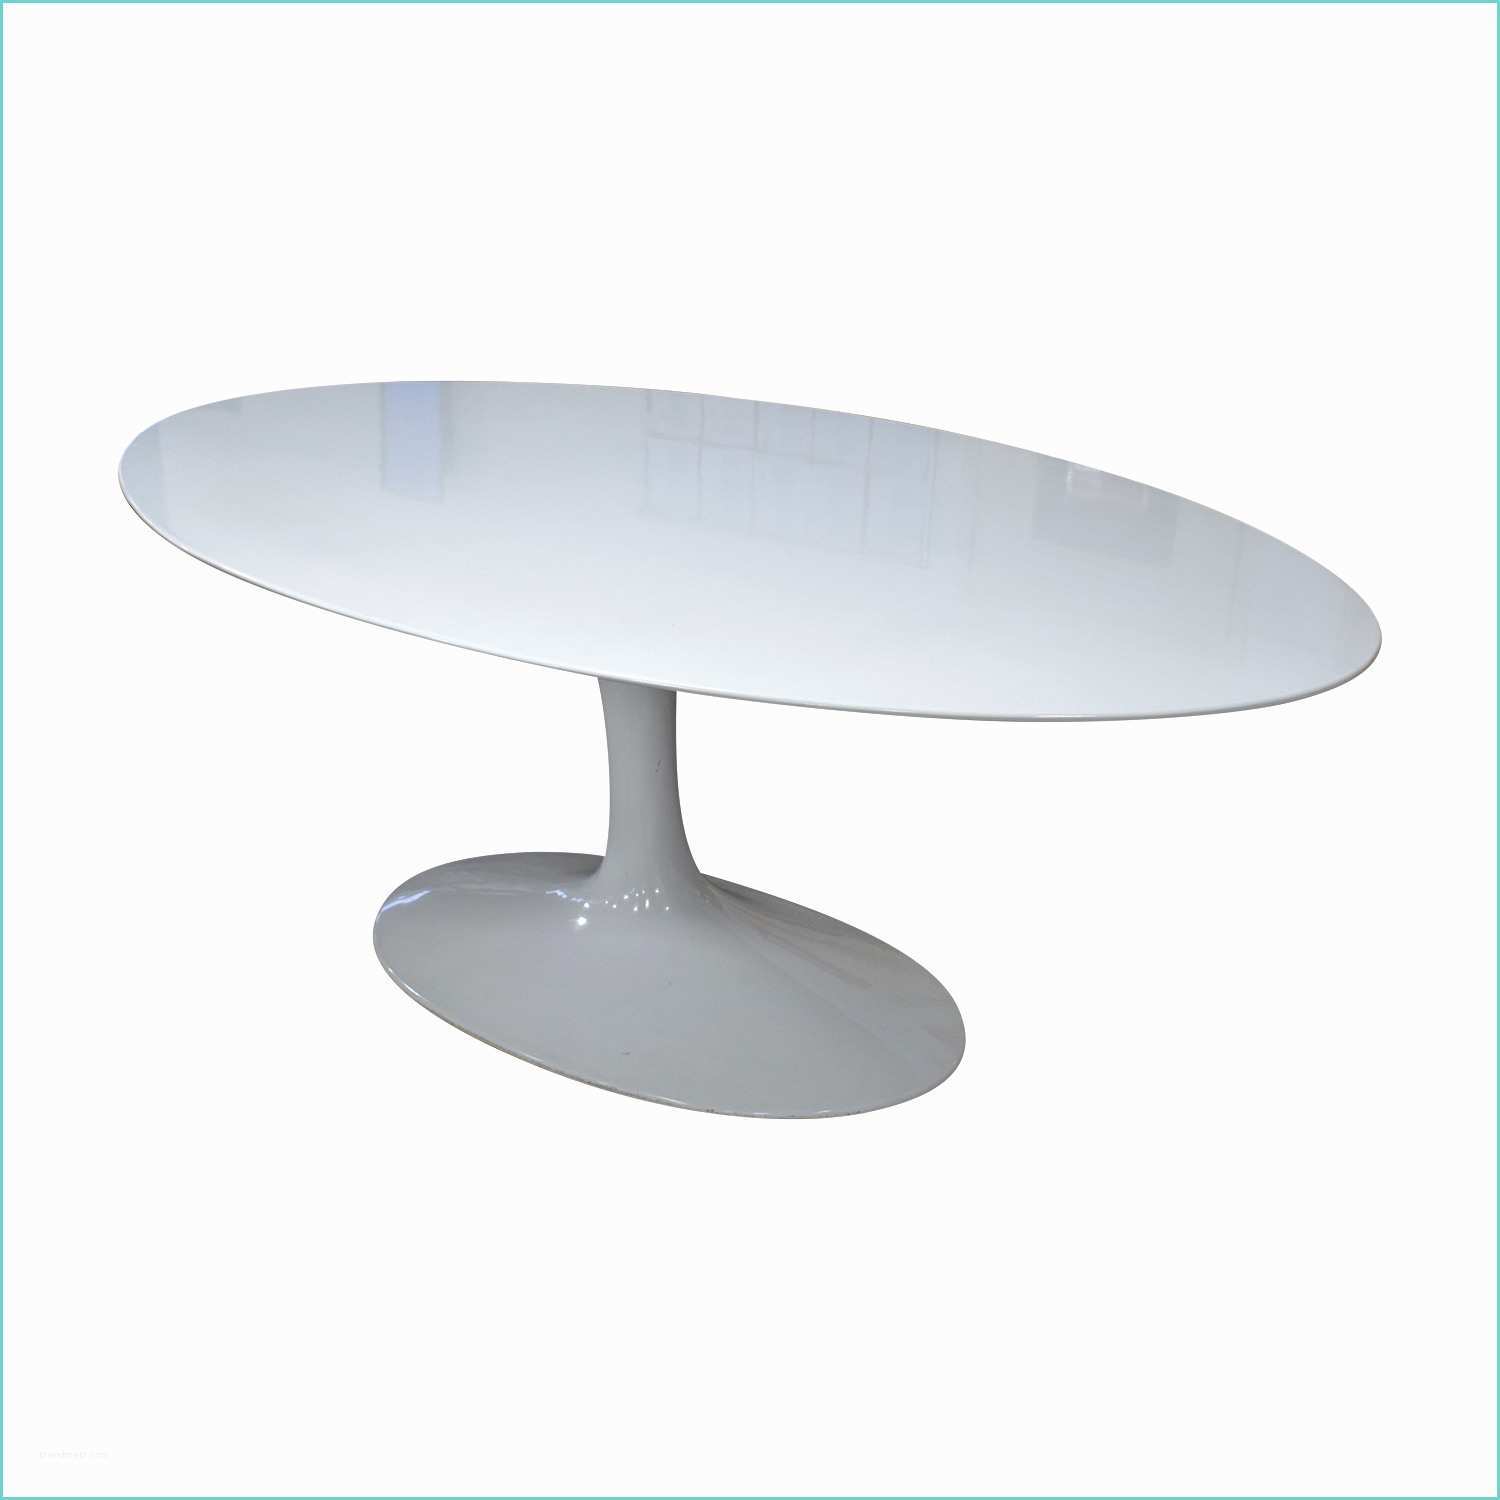 Saarinen Oval Dining Table Replica Off Replica Of White Knoll Saarinen Oval Table Tables